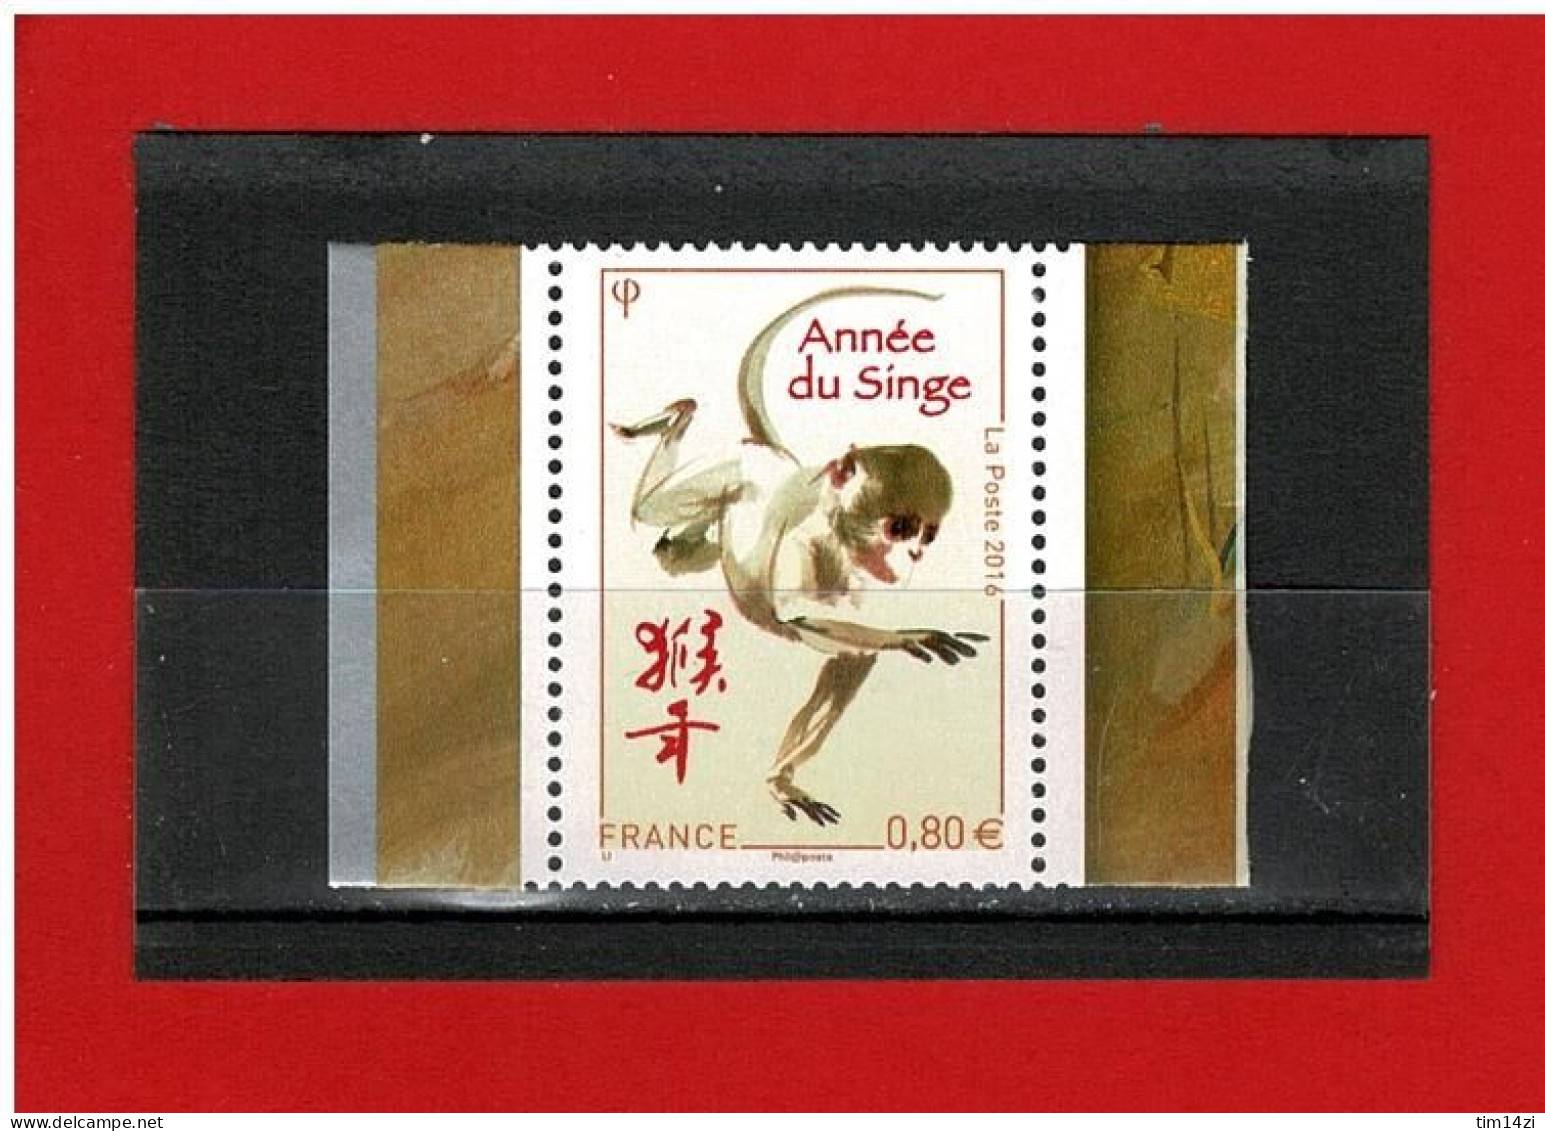 2016 - ANNEE LUNAIRE CHINOISE DU SINGE - N°5031 - NEUF** - COTE Y & T : 2.50 Euros - Nuovi